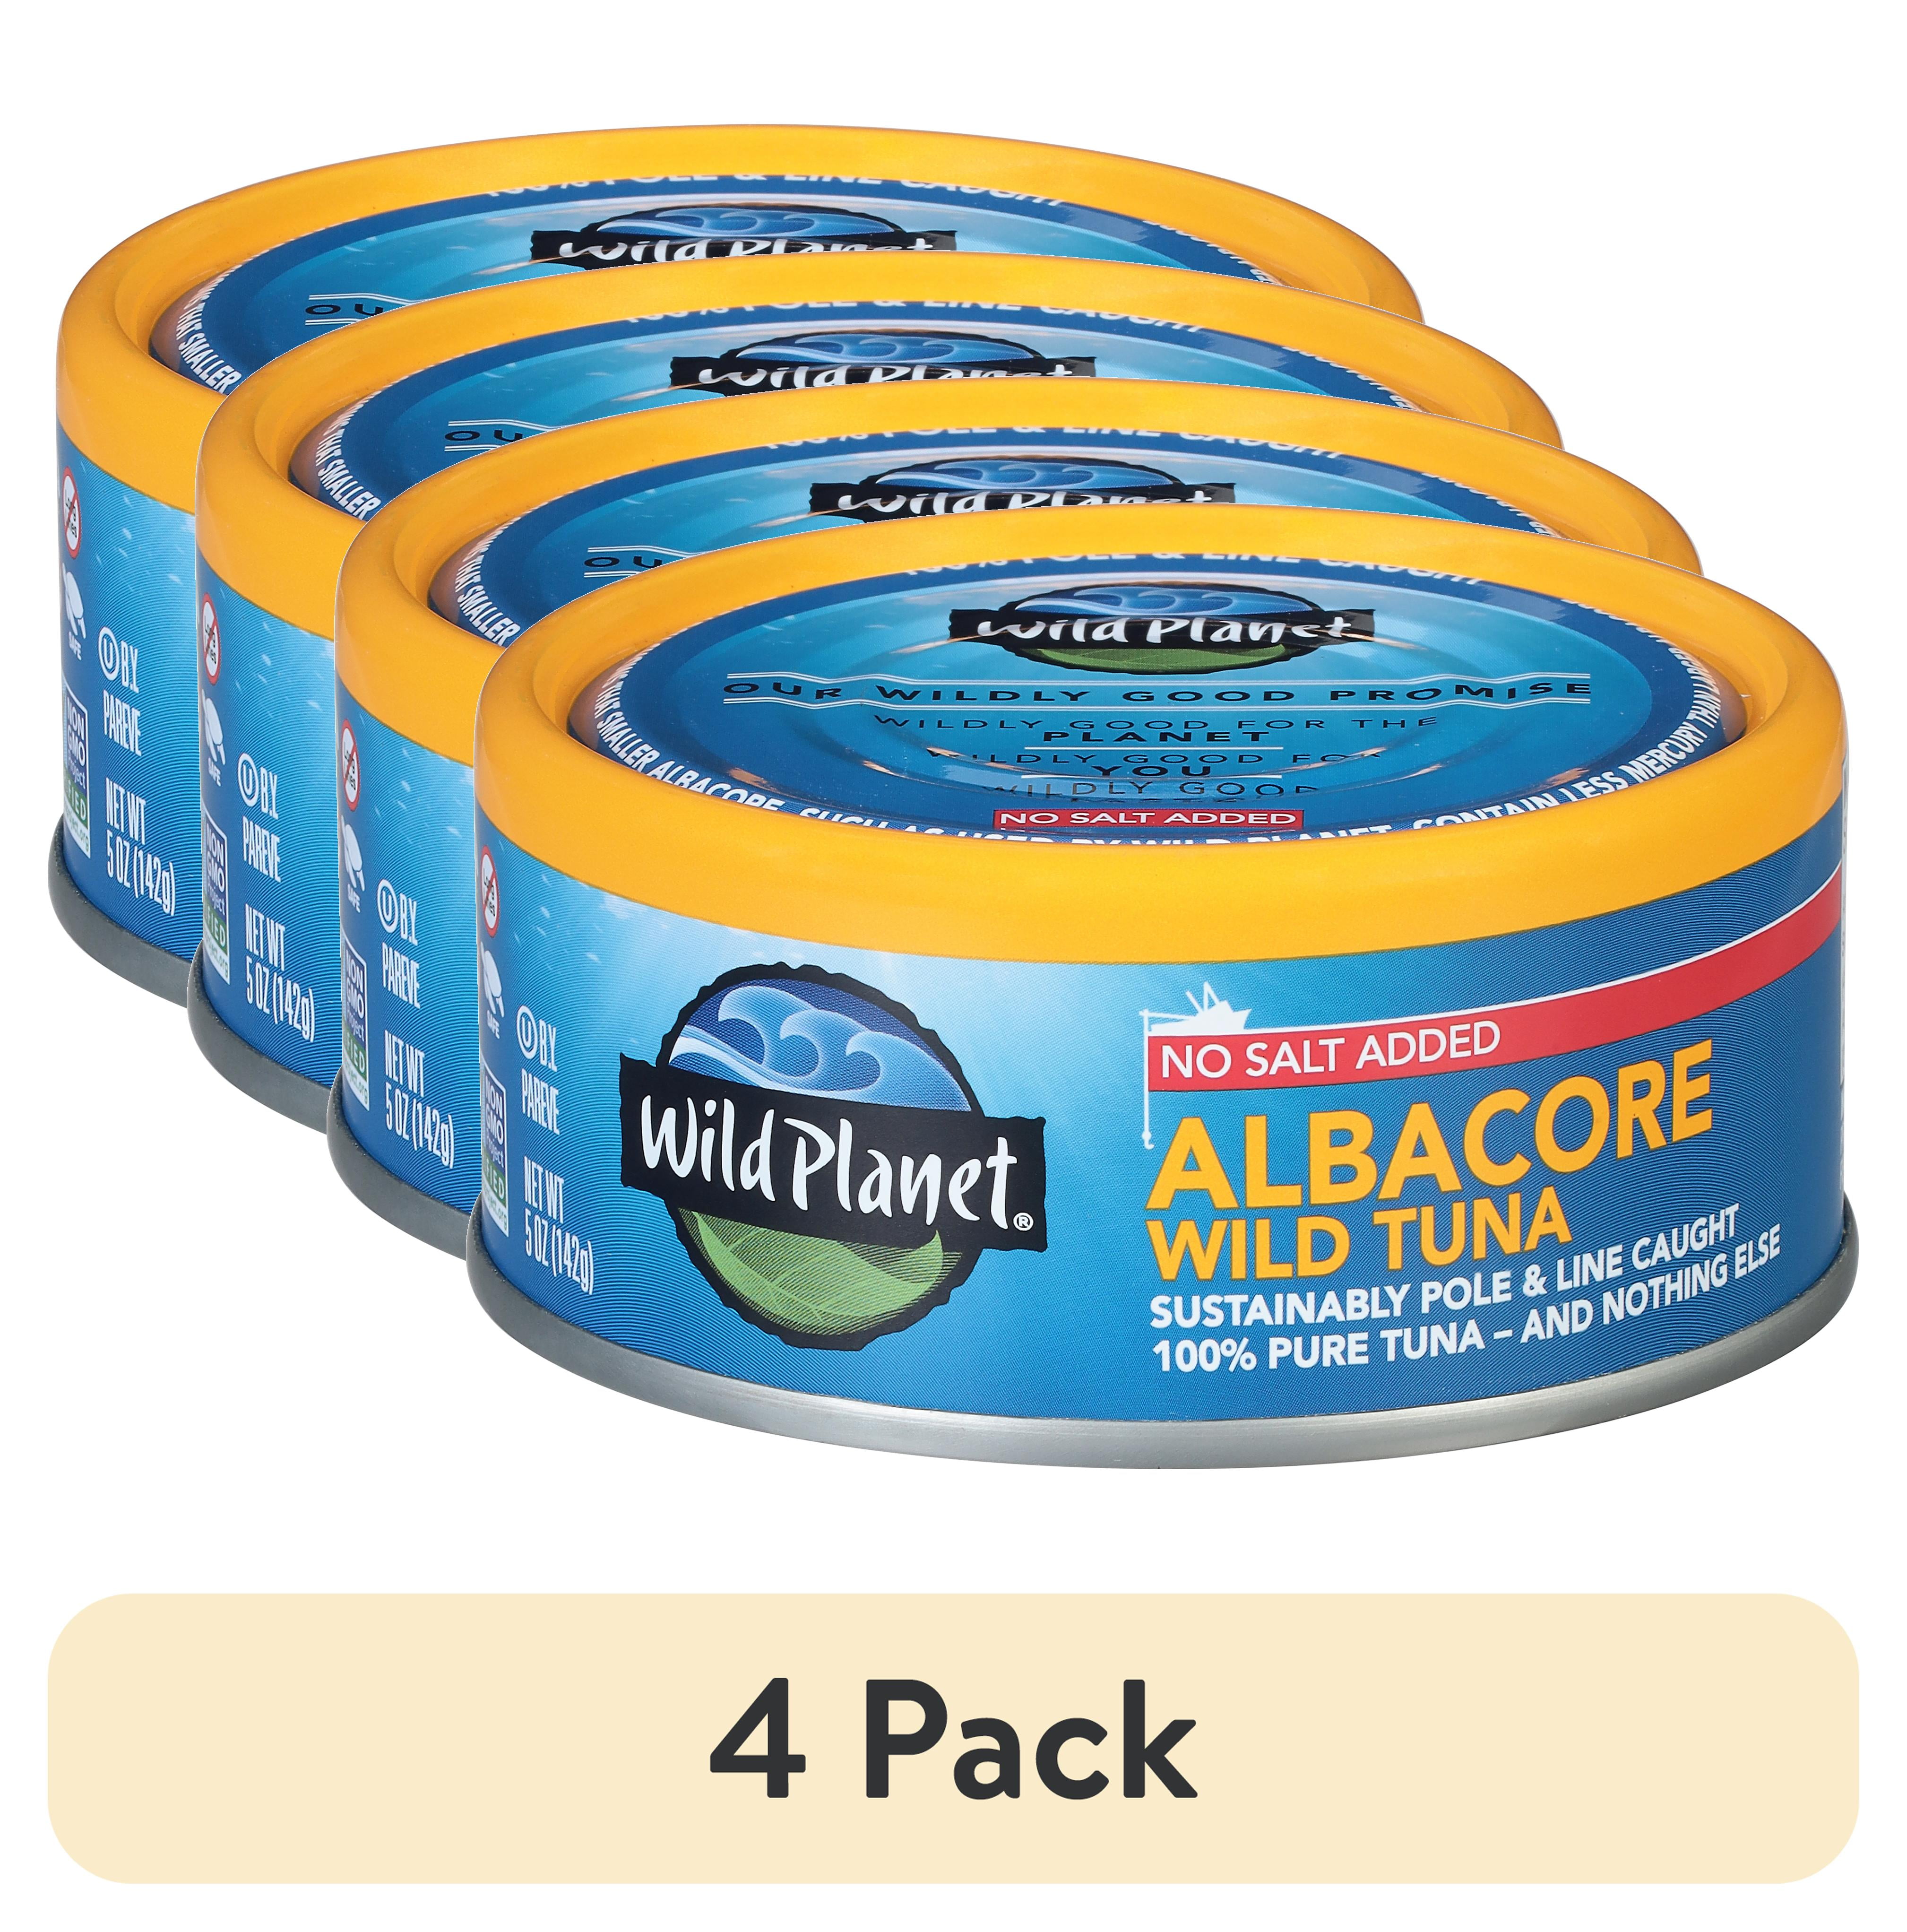 (4 pack) Wild Planet Albacore No Salt Added Wild Tuna 5 oz